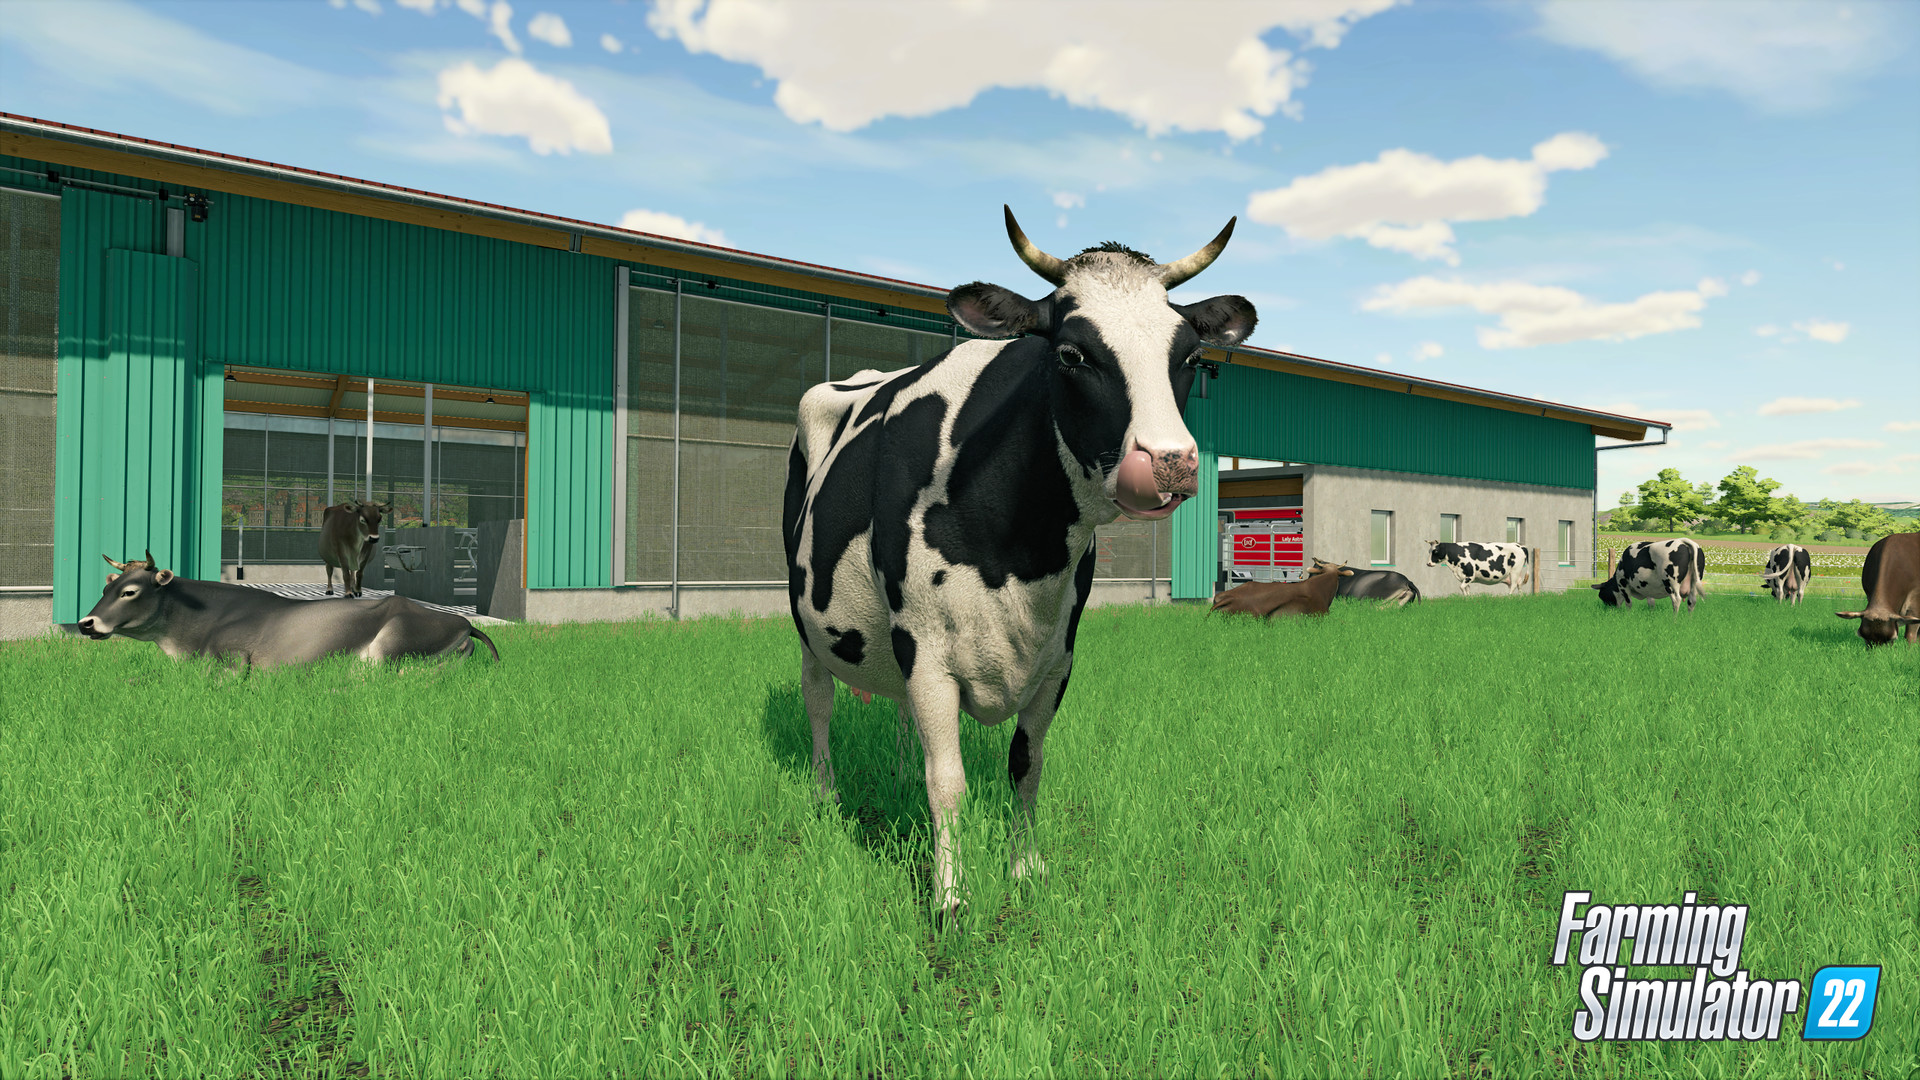 Farming Simulator 22 Steam Altergift